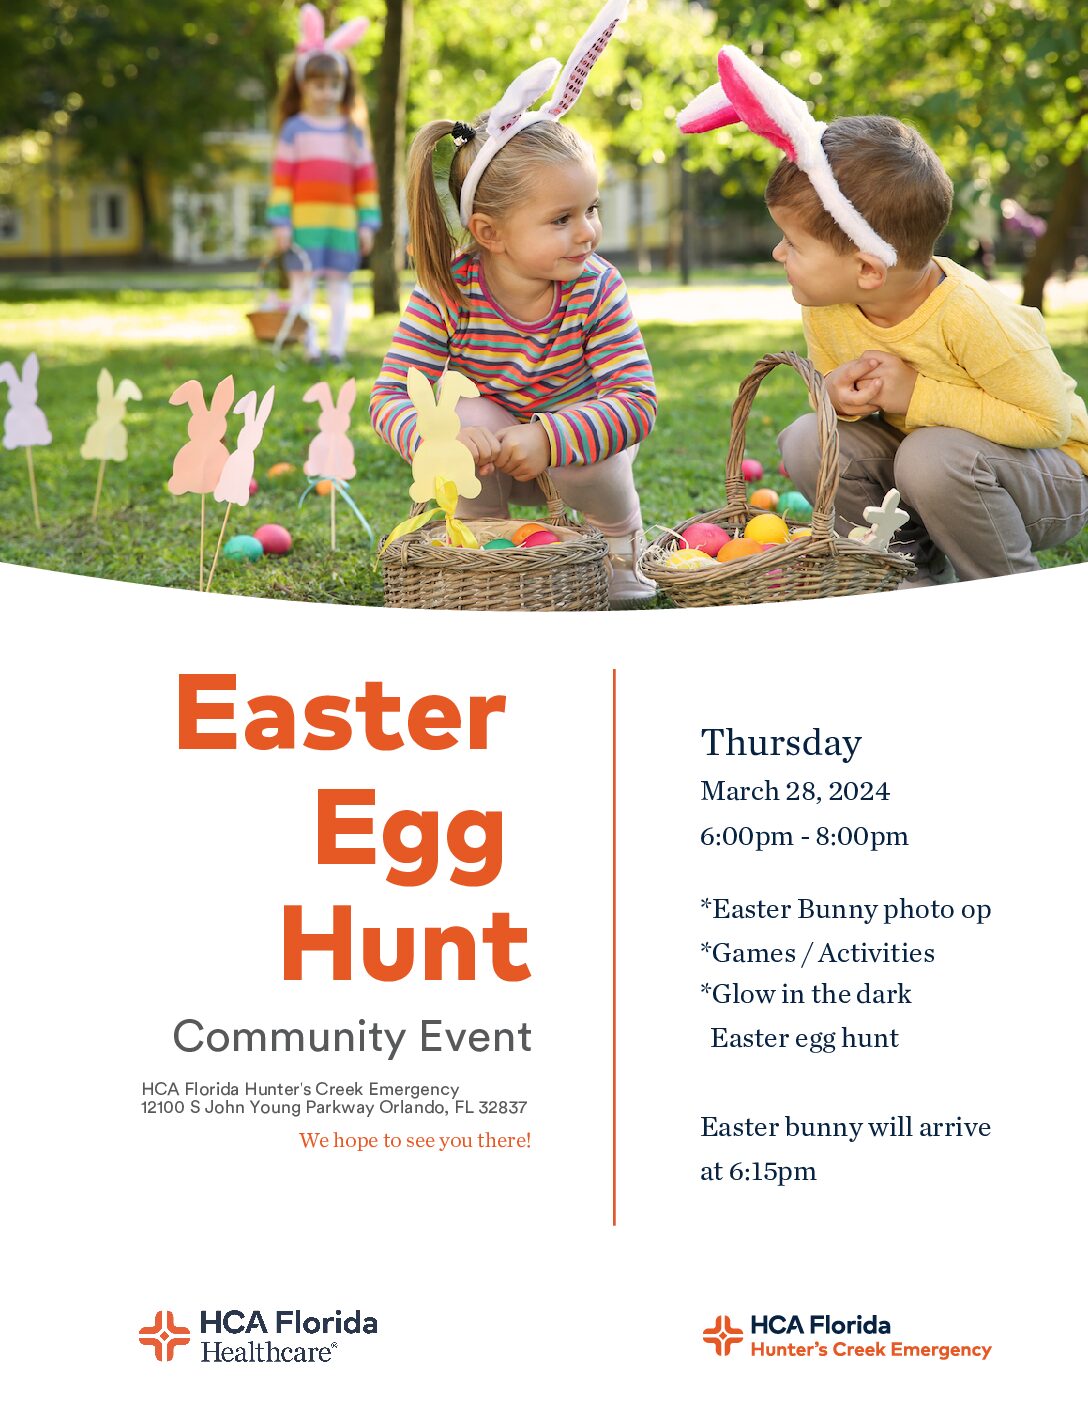 HCA Florida’s Hunter’s Creek Emergency Easter Egg Hunt